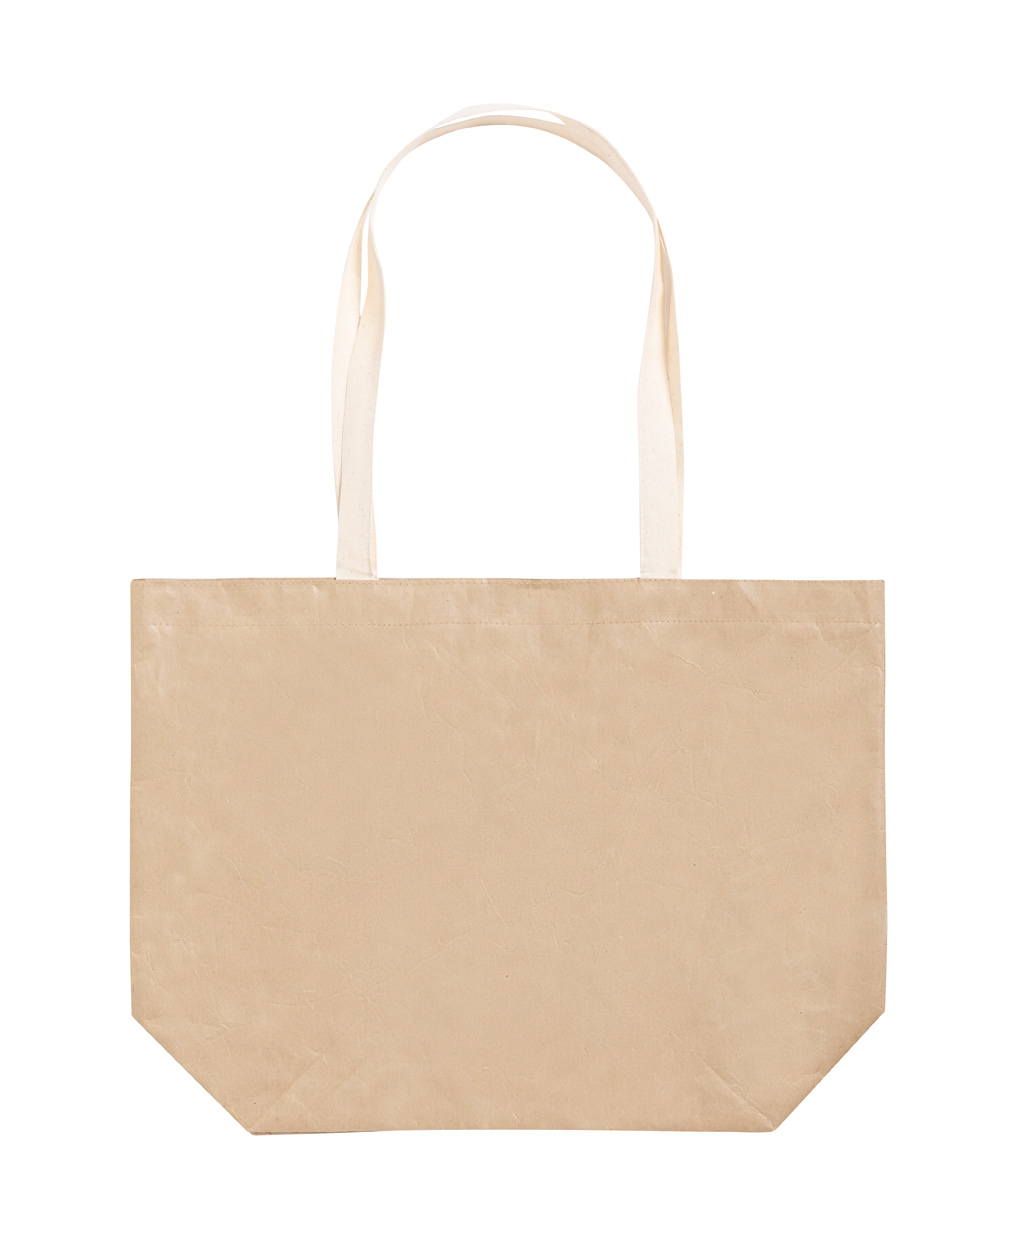 Palzim paper shopping bag Natural, White